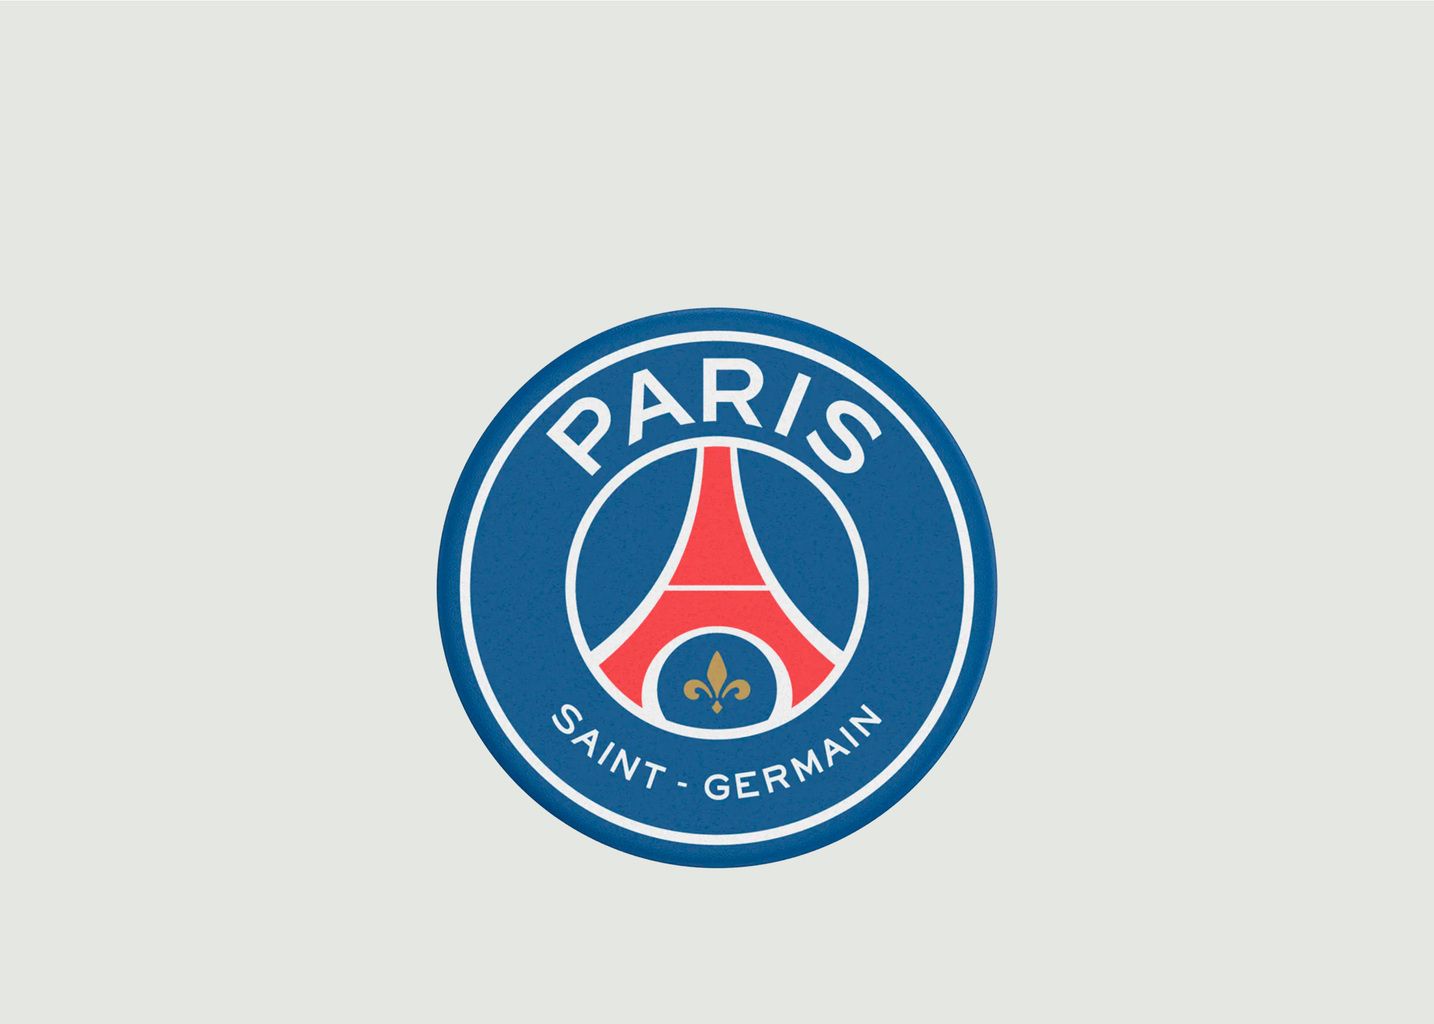 PopGrip Logo Paris Saint-Germain - Xoopar